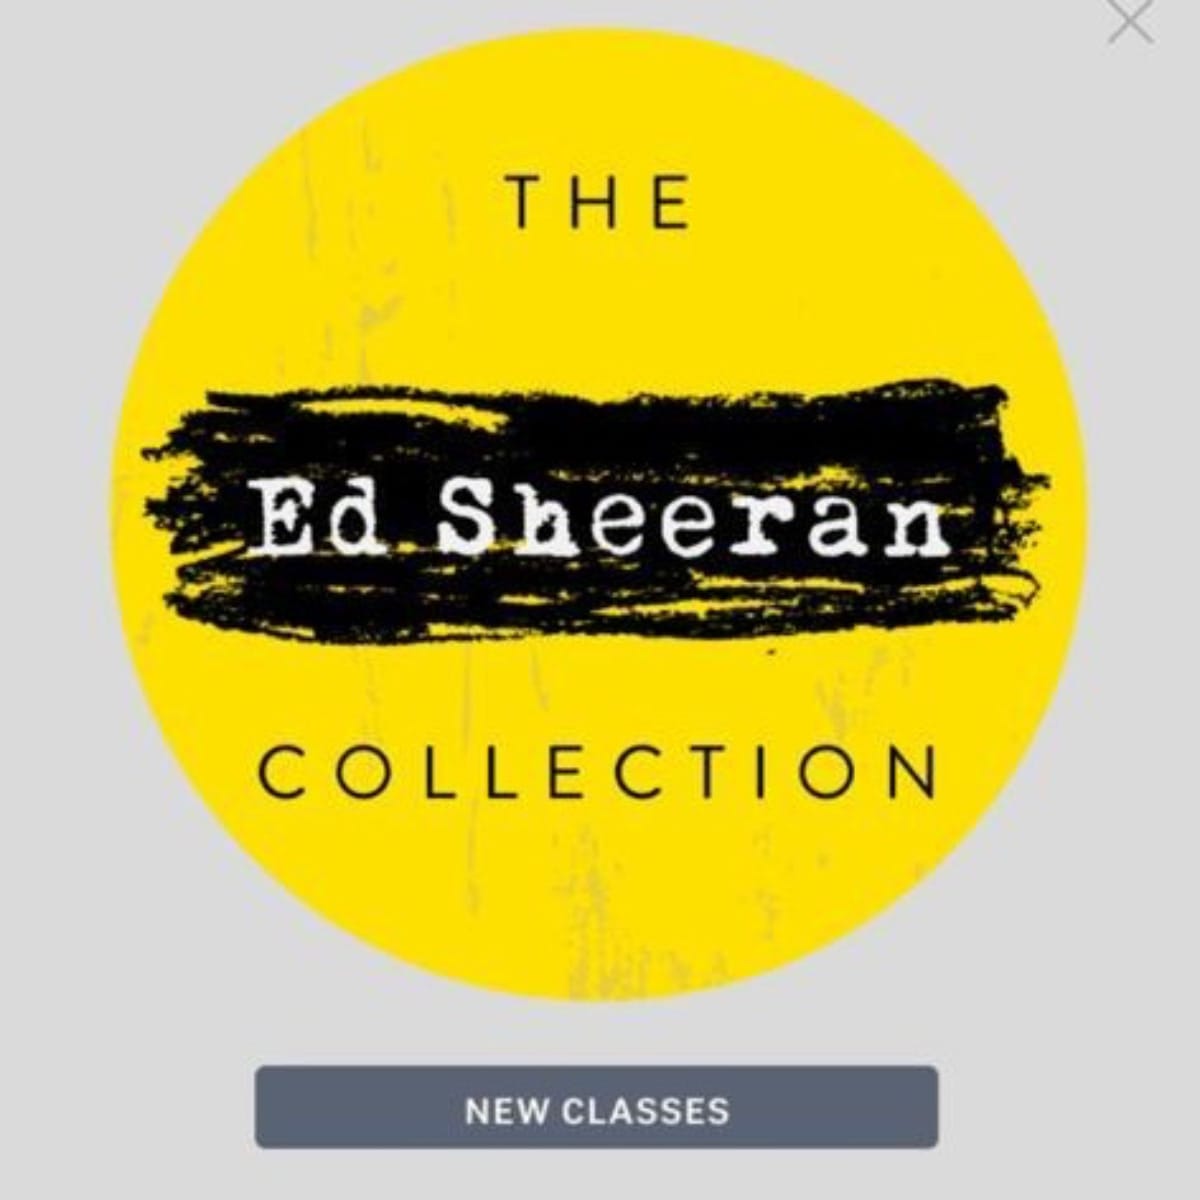 Peloton highlighting the new Ed Sheeran classes in the Peloton app